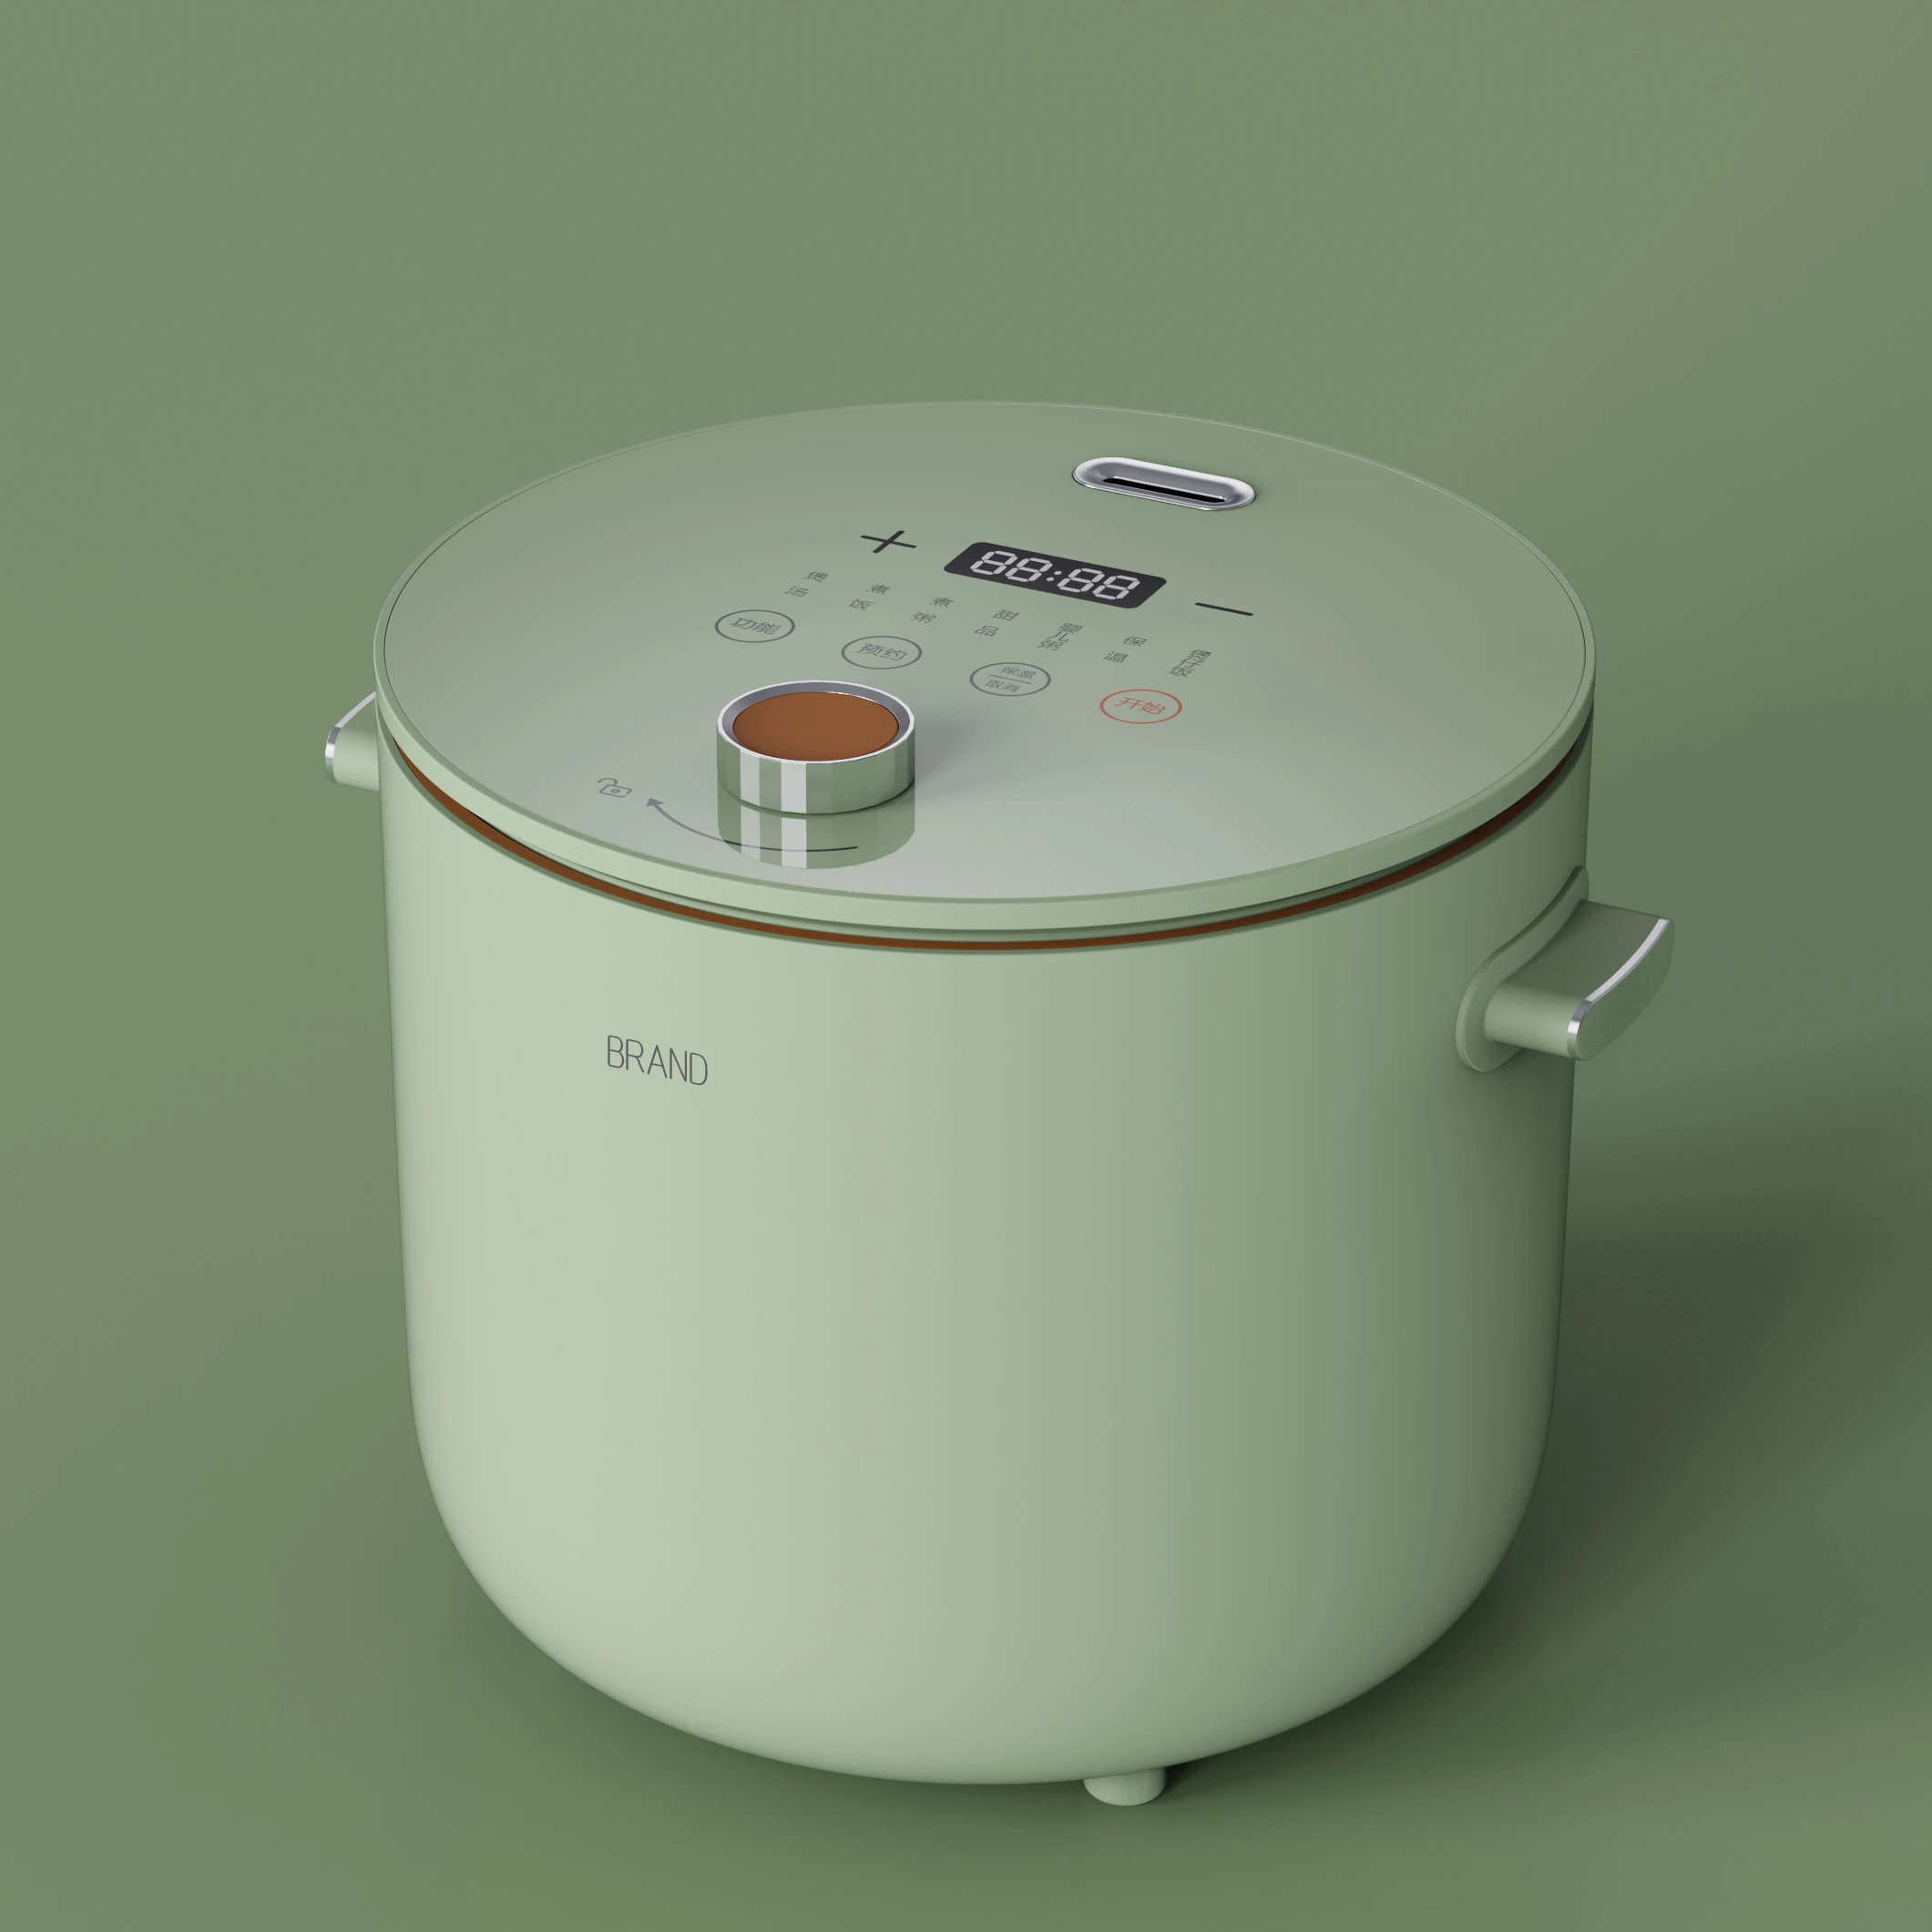 21 0 6l小型かわいいスマート韓国電気ミニ炊飯器 Buy 炊飯器ミニ 韓国の電気ミニ炊飯器 ミニ炊飯器 Product On Alibaba Com